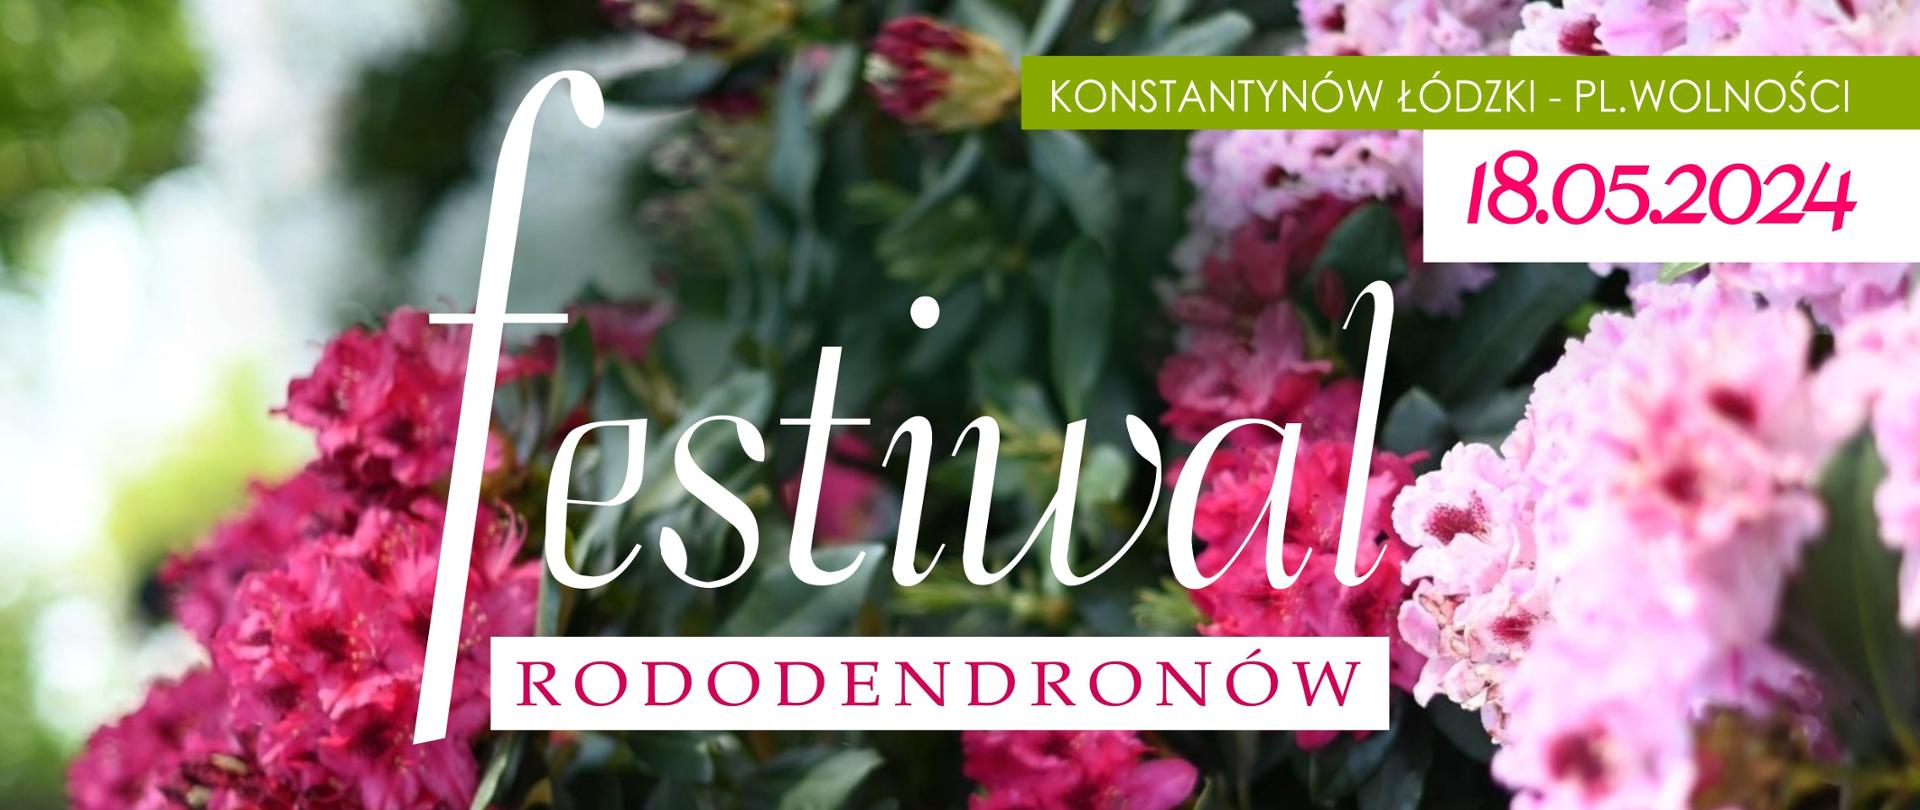 festiwal rododendronów 18.05.2024